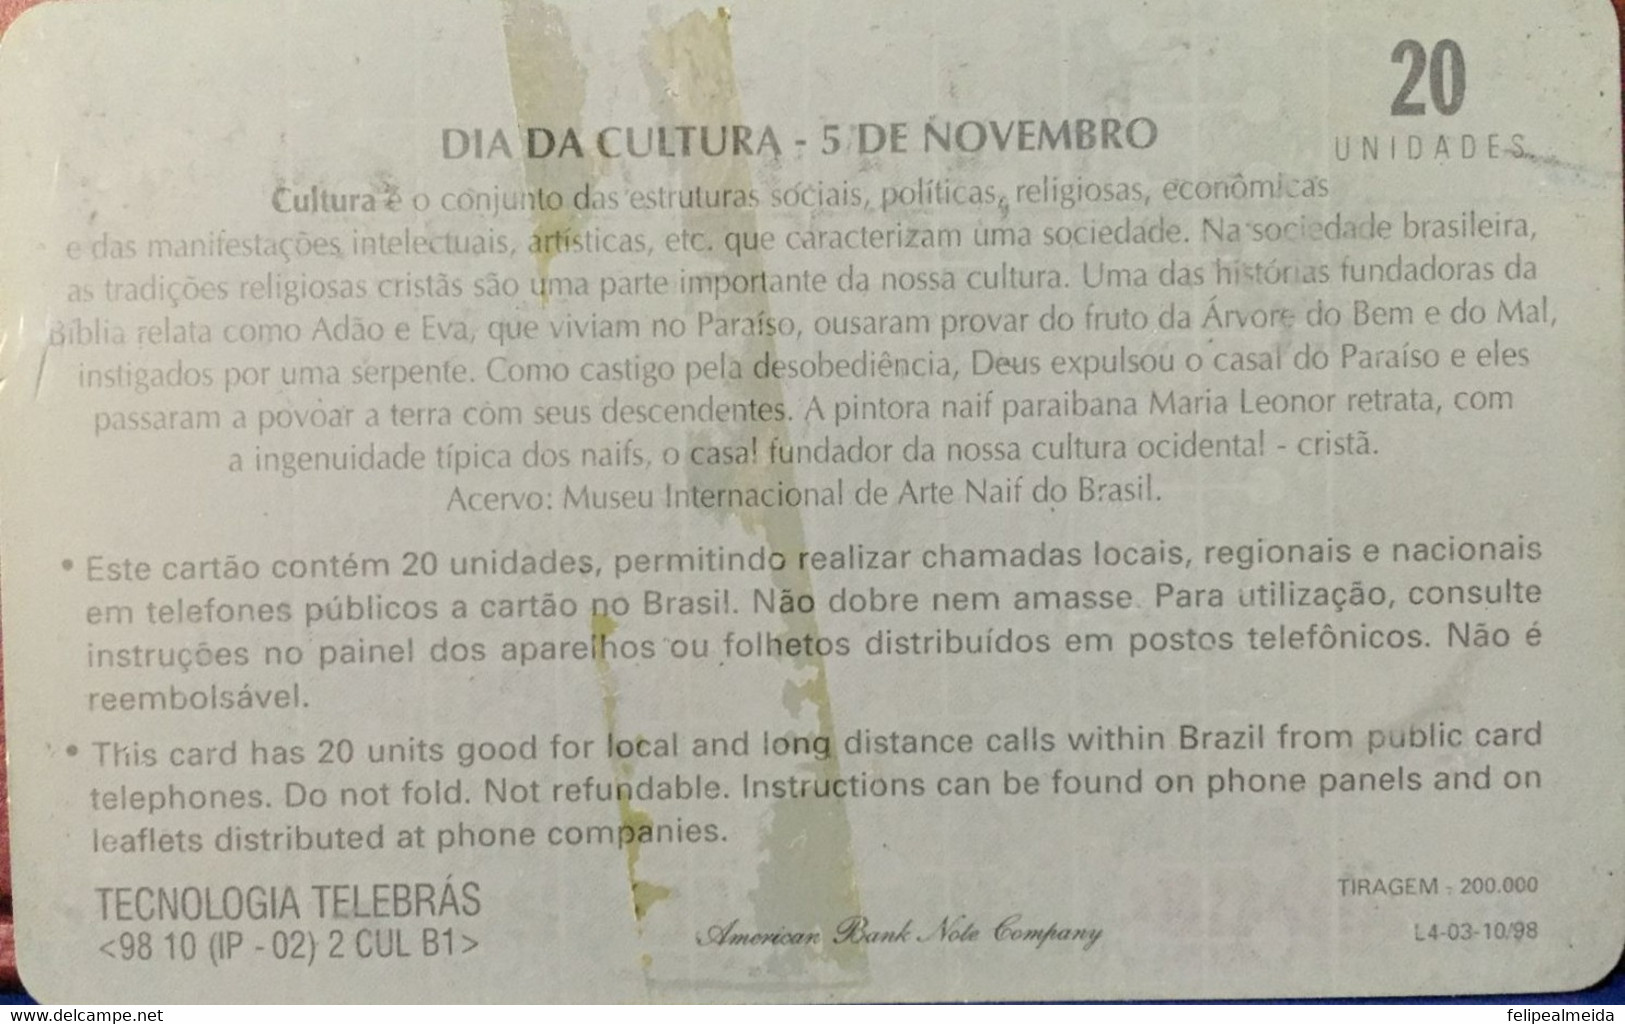 Phone Card Manufactured By Telerj In 1998 - Celebration Of Culture Day 5 November - Cultural